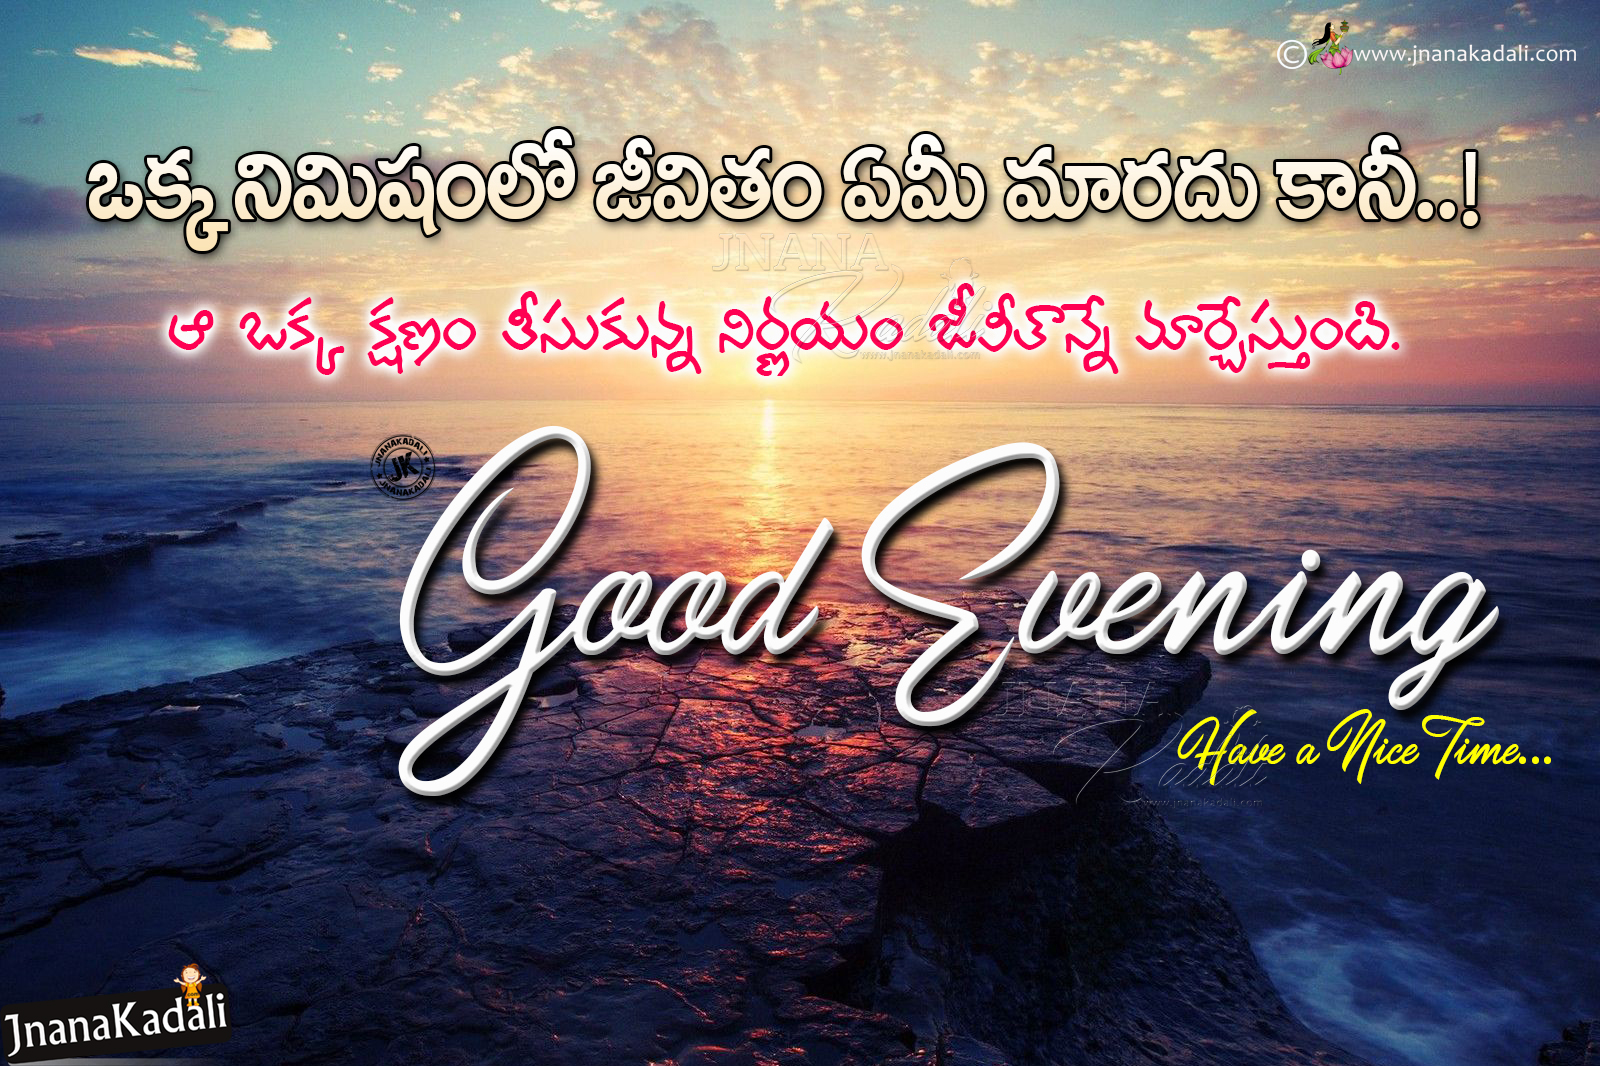 Telugu Good Evening Latest Quotes hd wallpapers-Subhasayantram ...